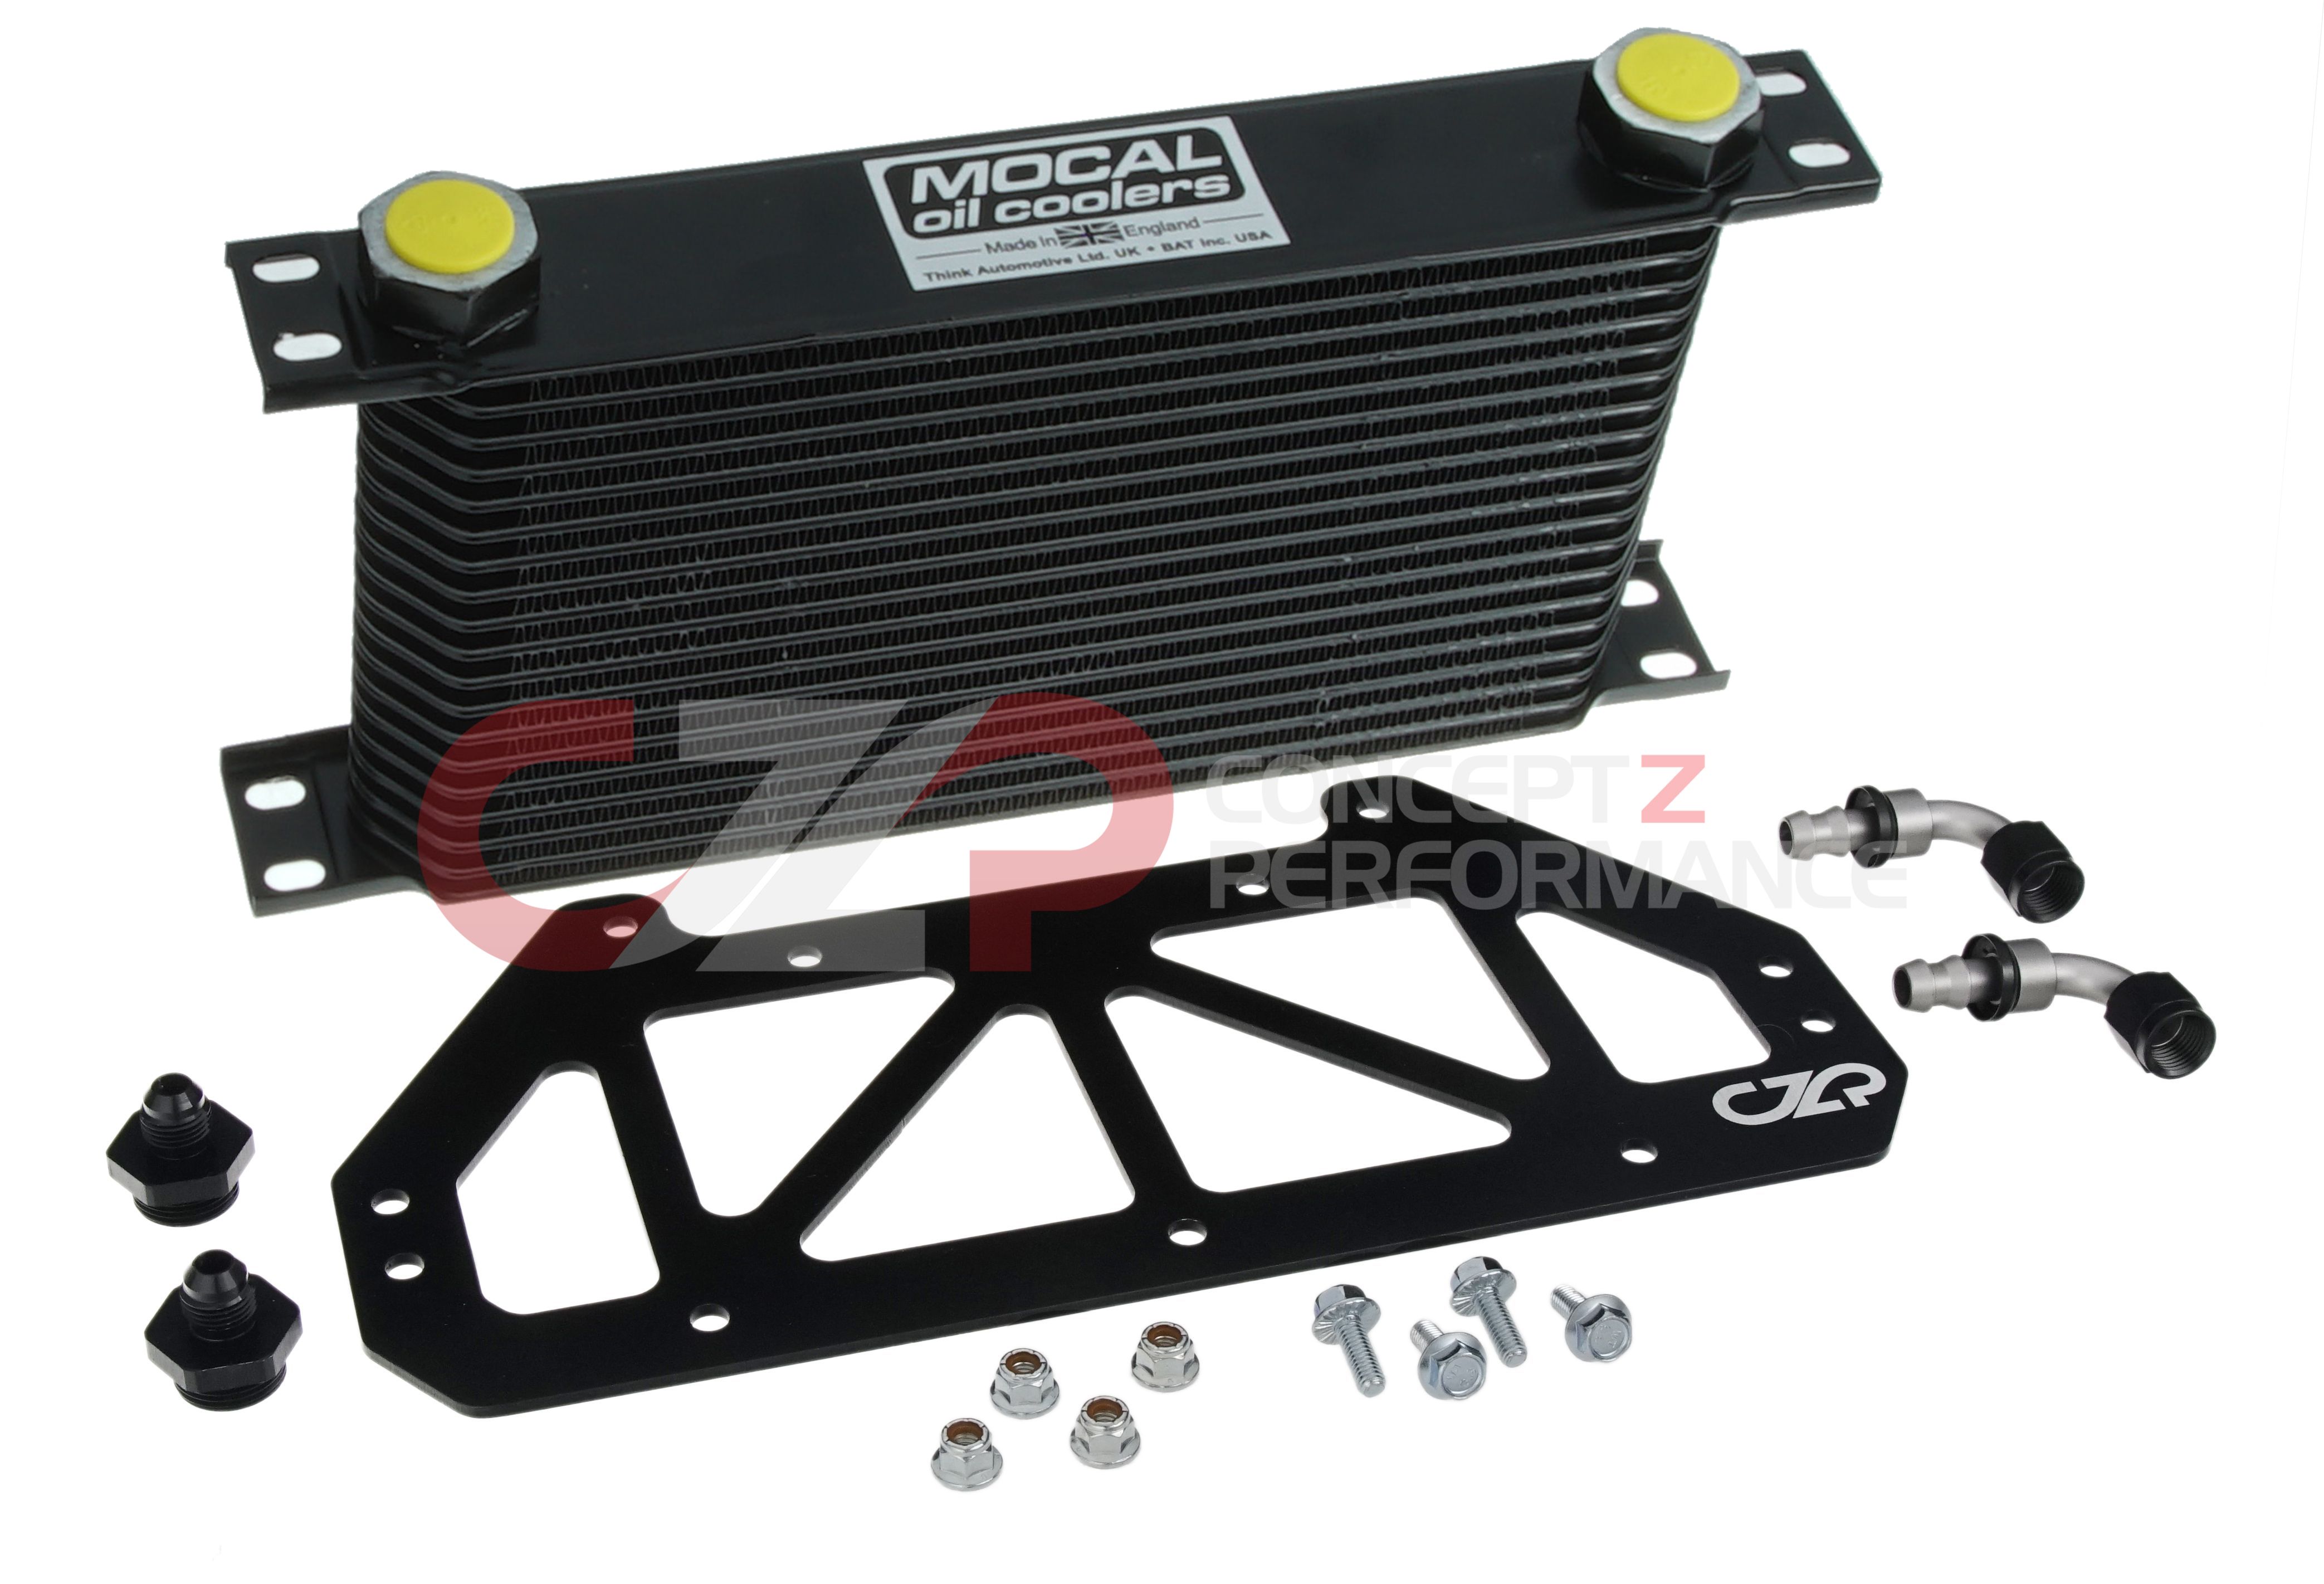 CZP Oil Cooler Upgrade Kit w/ Mocal Oil Cooler - Nissan 300ZX Twin Turbo TT Z32